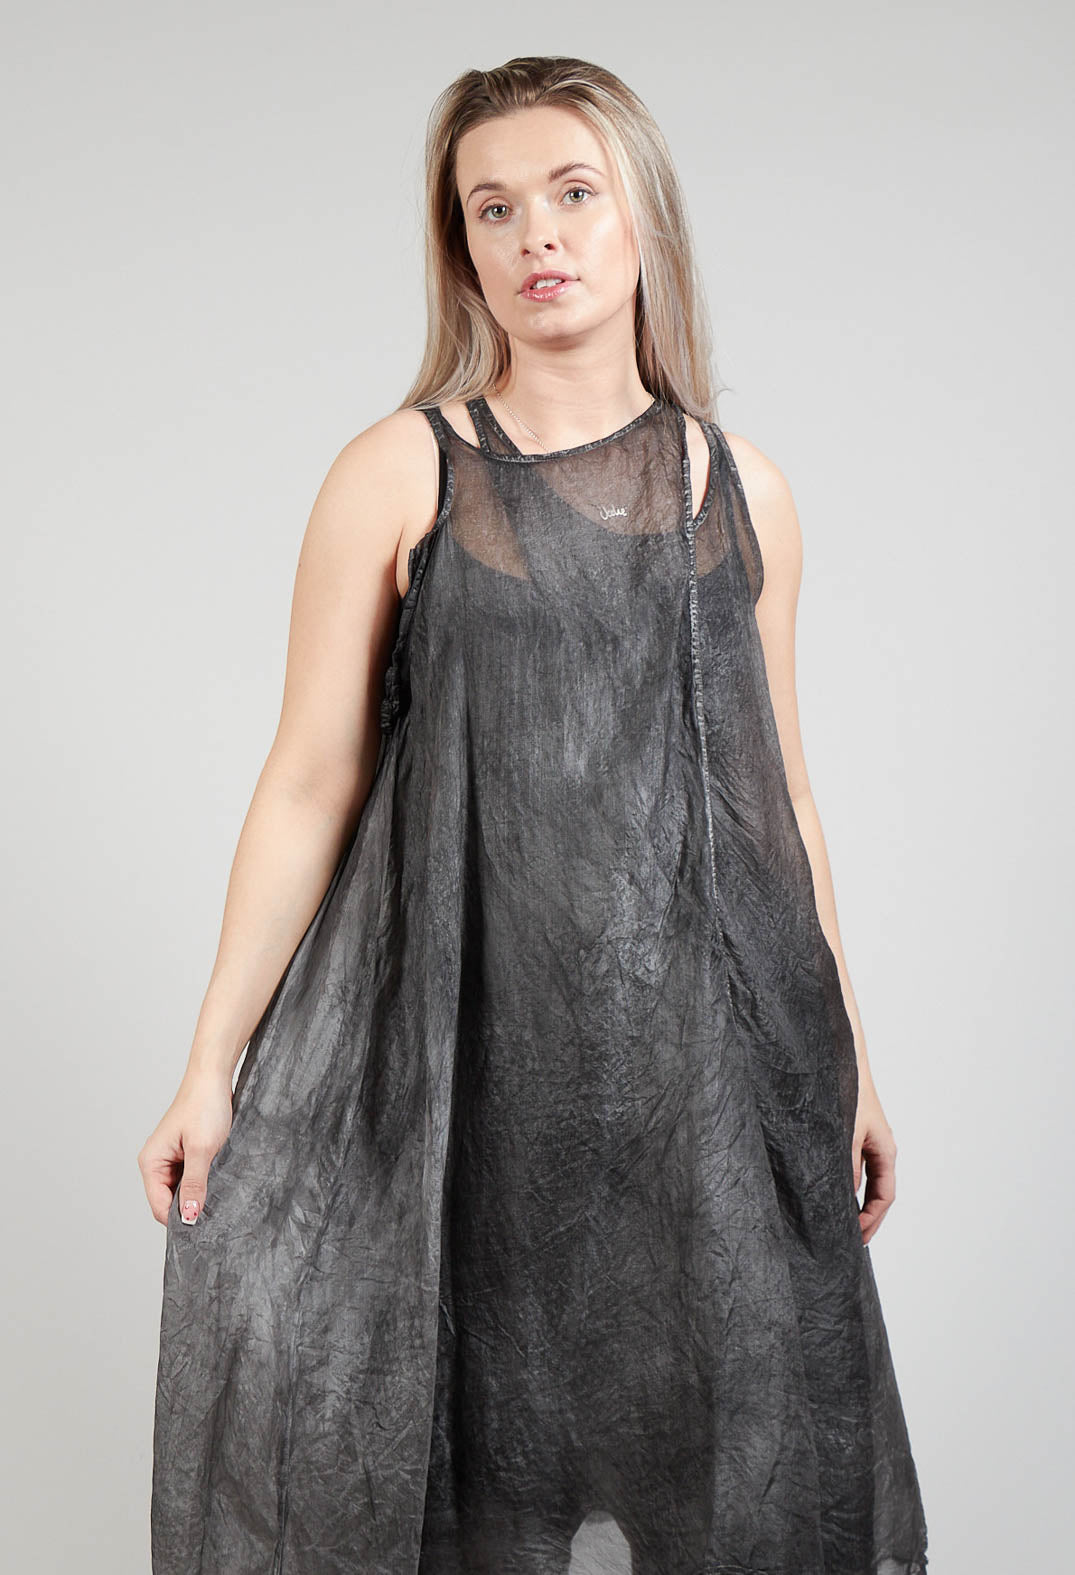 Silk Overdress in Coal Cloud